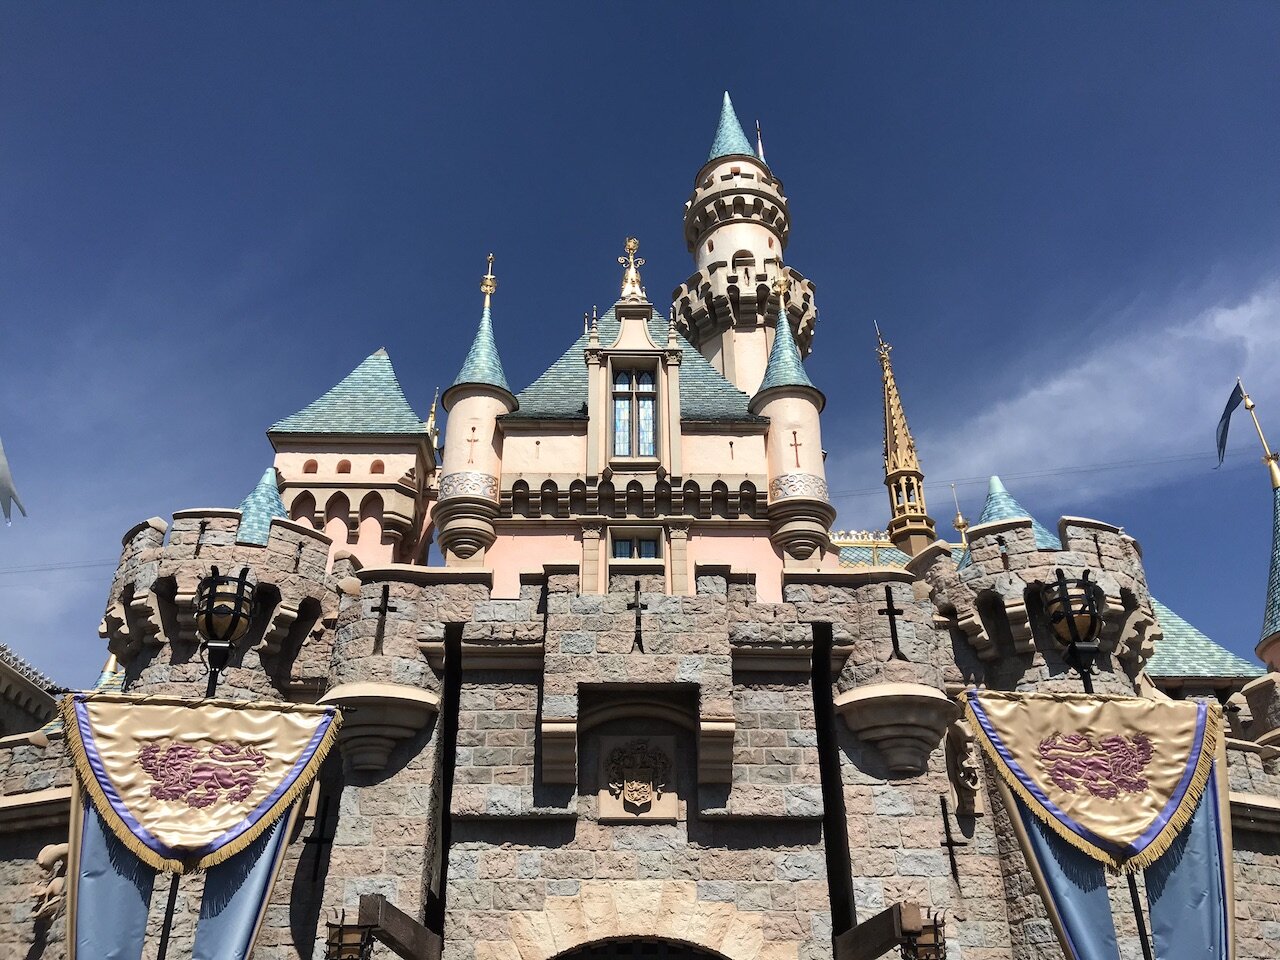 Disneylandia versus Walt Disney World